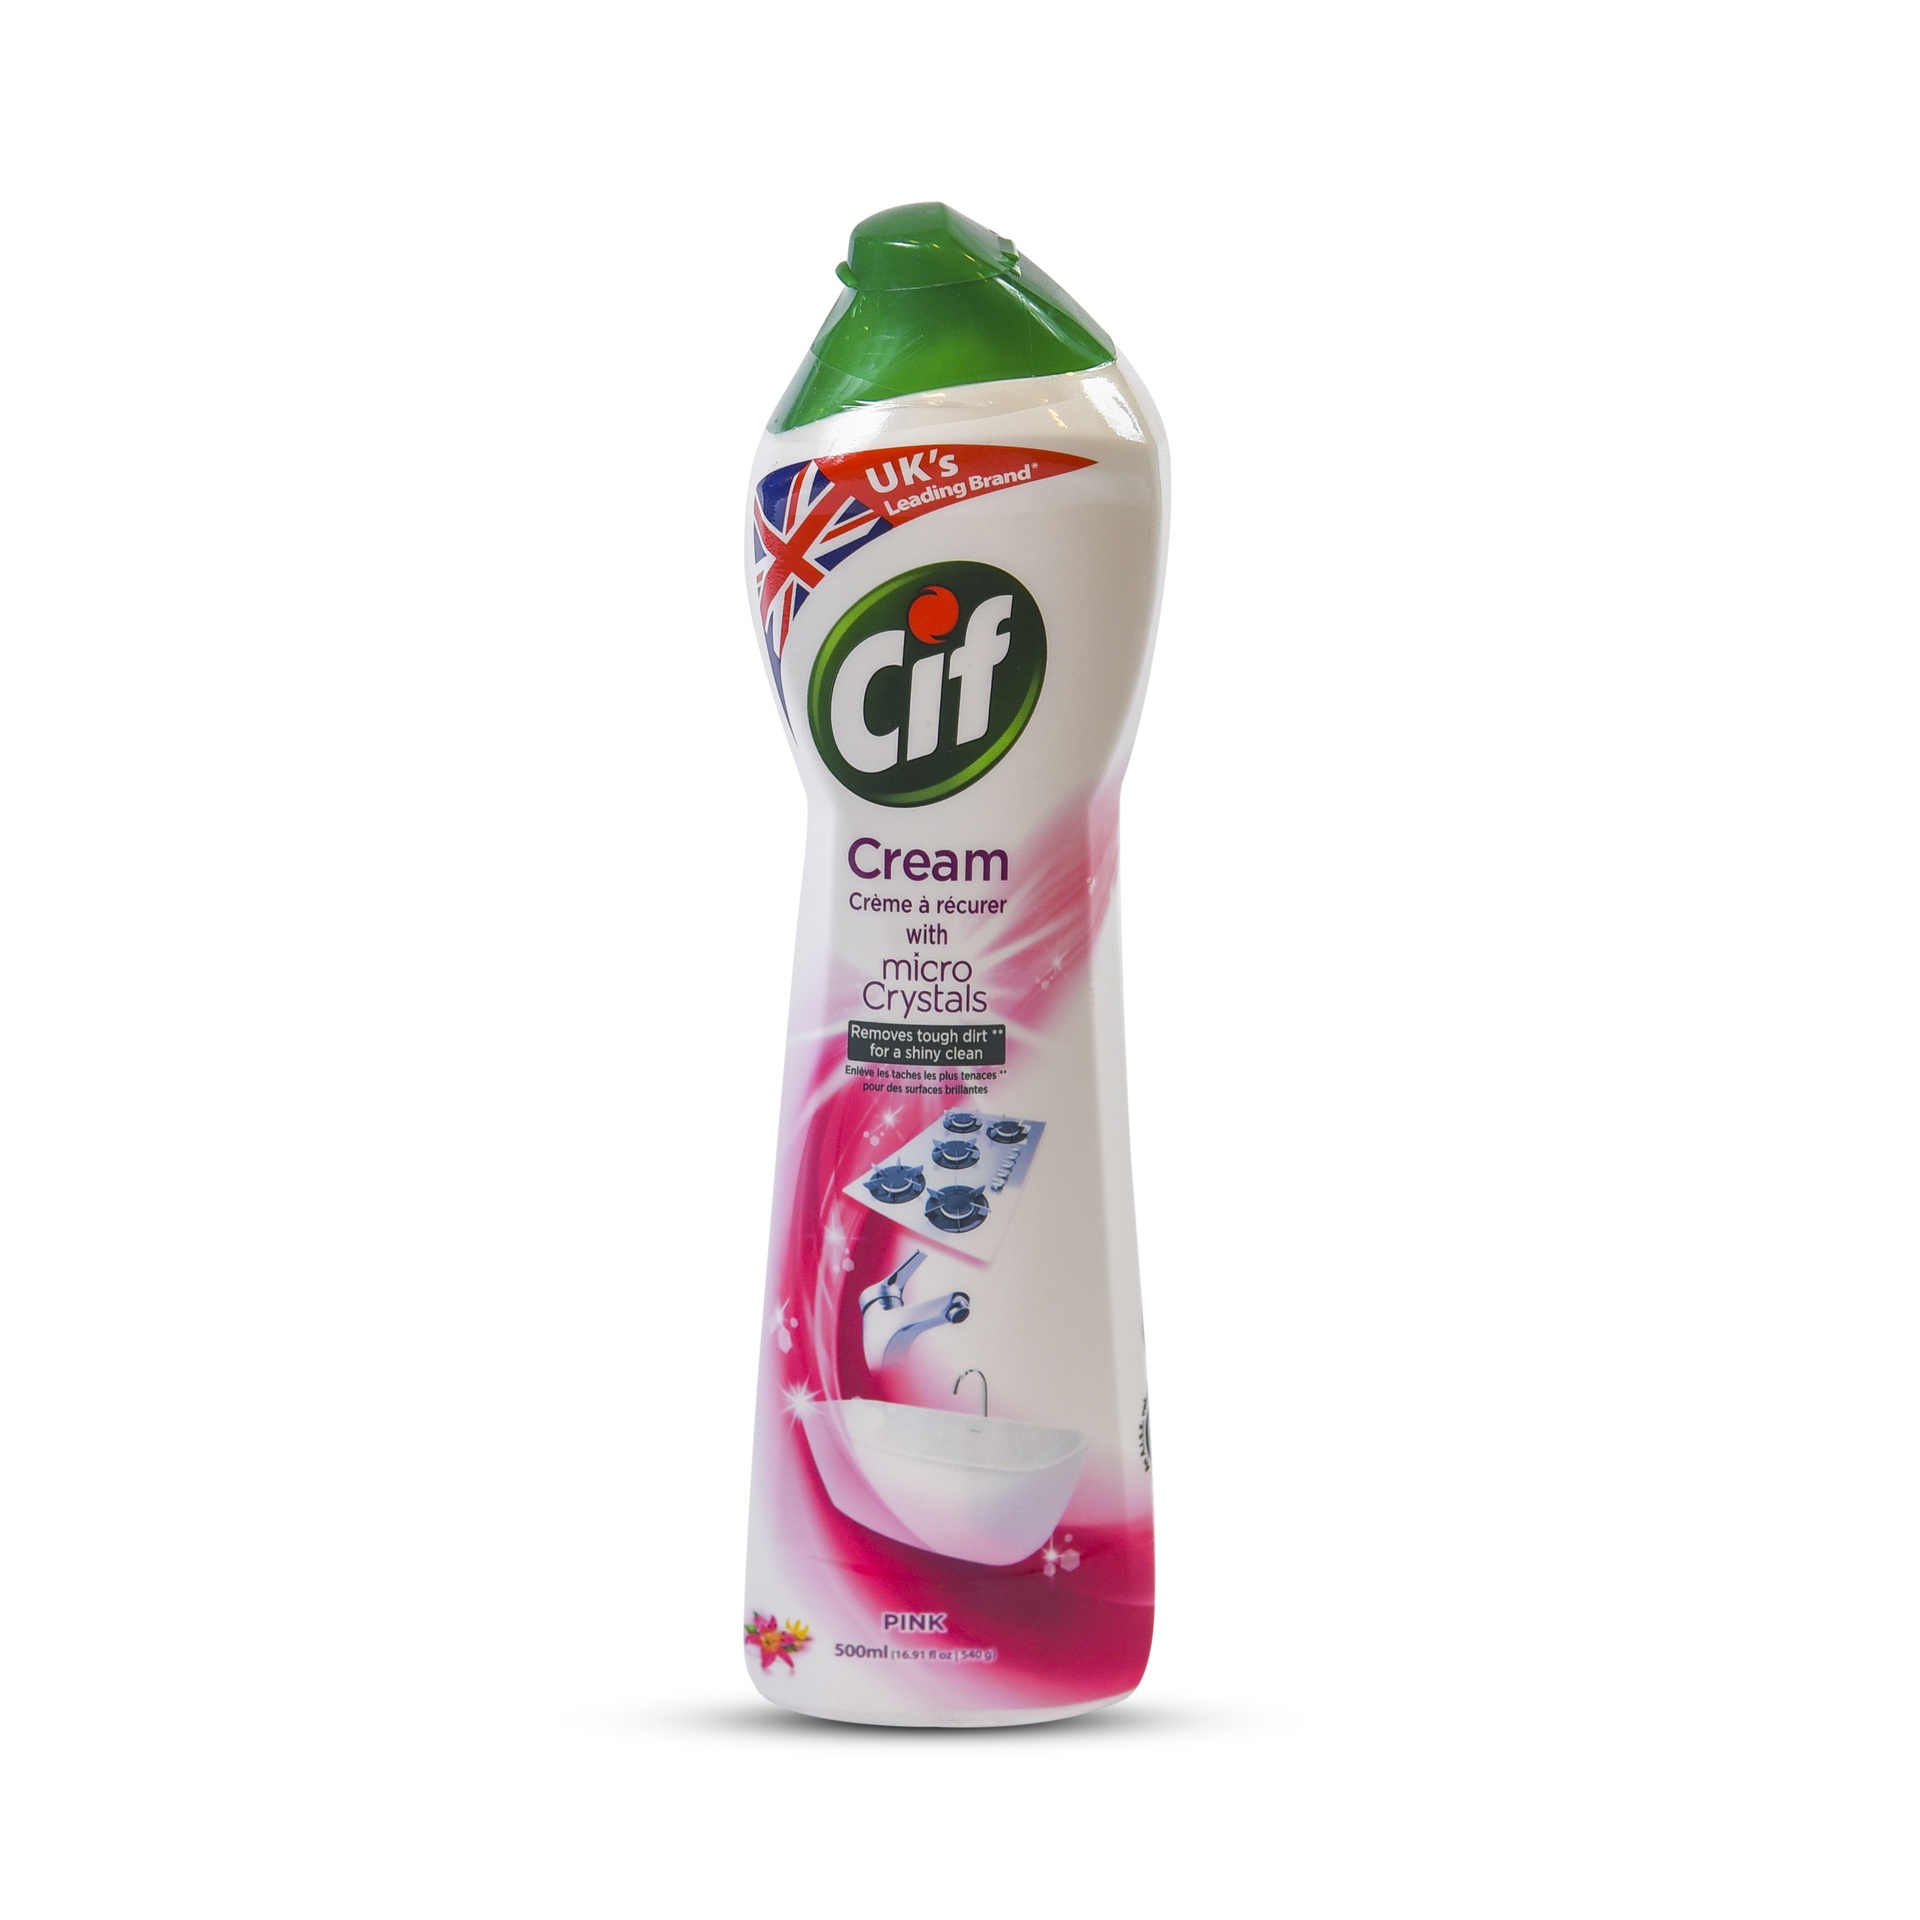 Cif - Cream, microcrystalline milk cleaner, Lila Flowers, net weight: 780g  - POLKA Health & Beauty